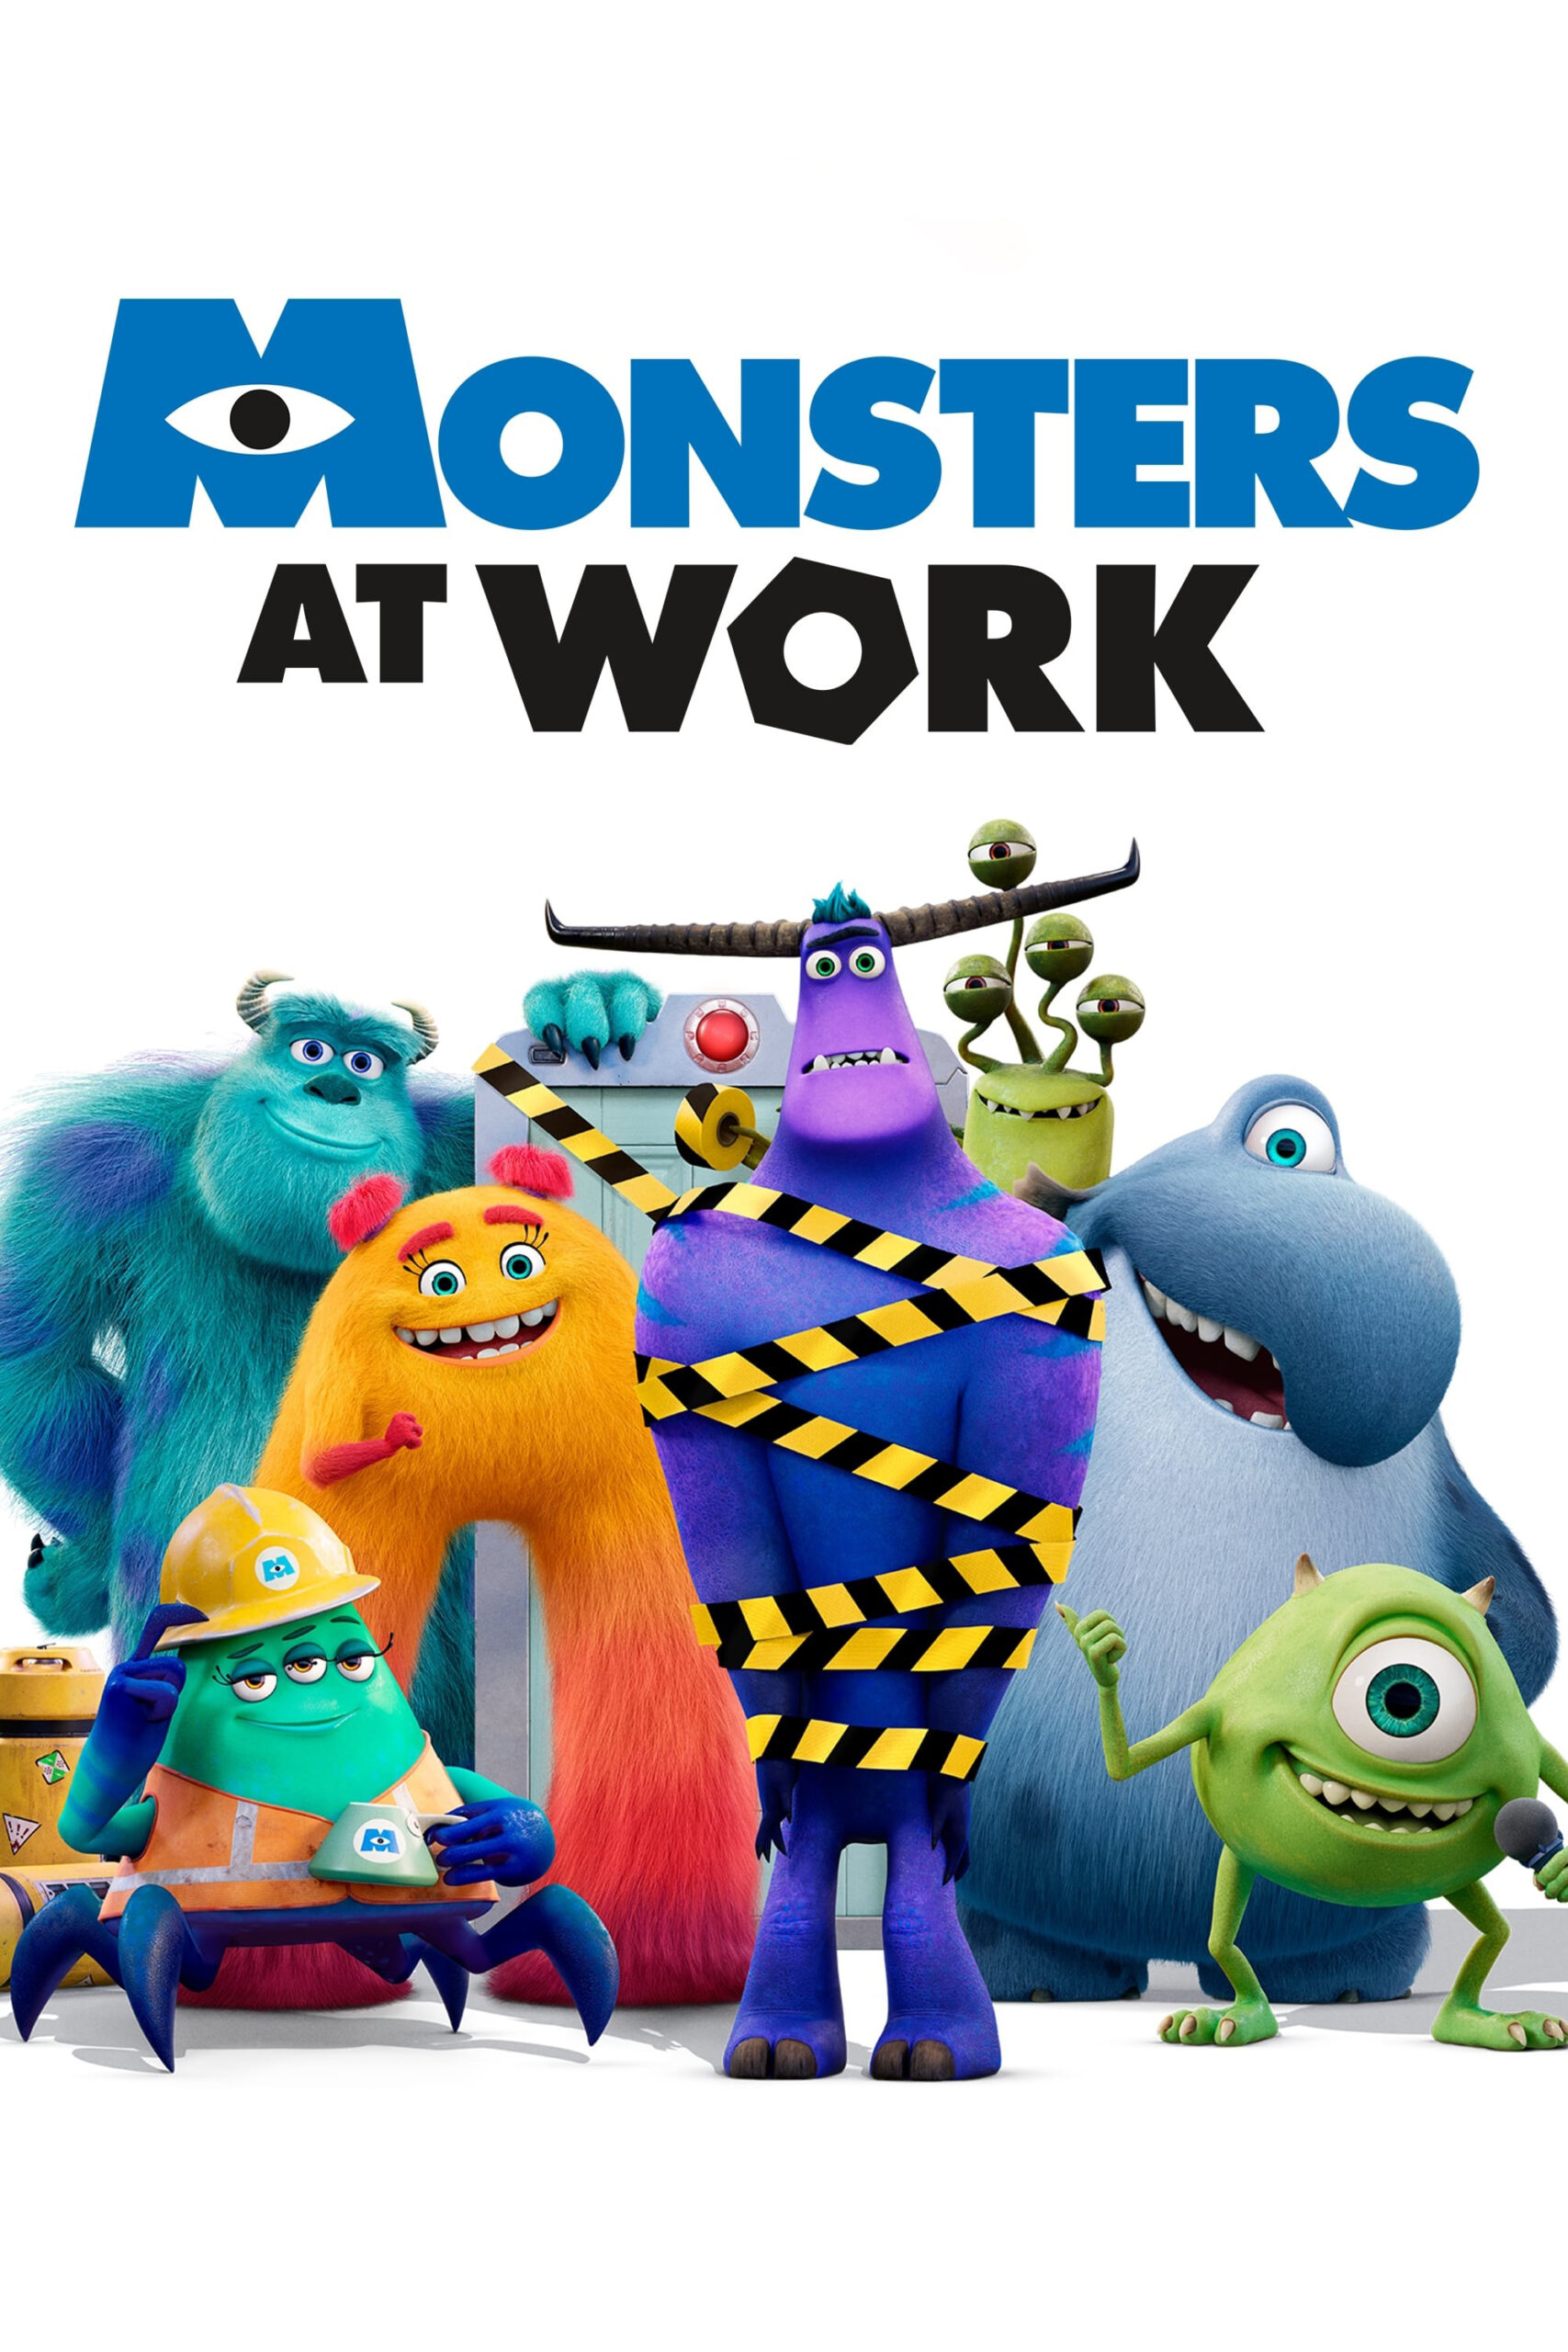 هیولاها در محل کار – Monsters At Work